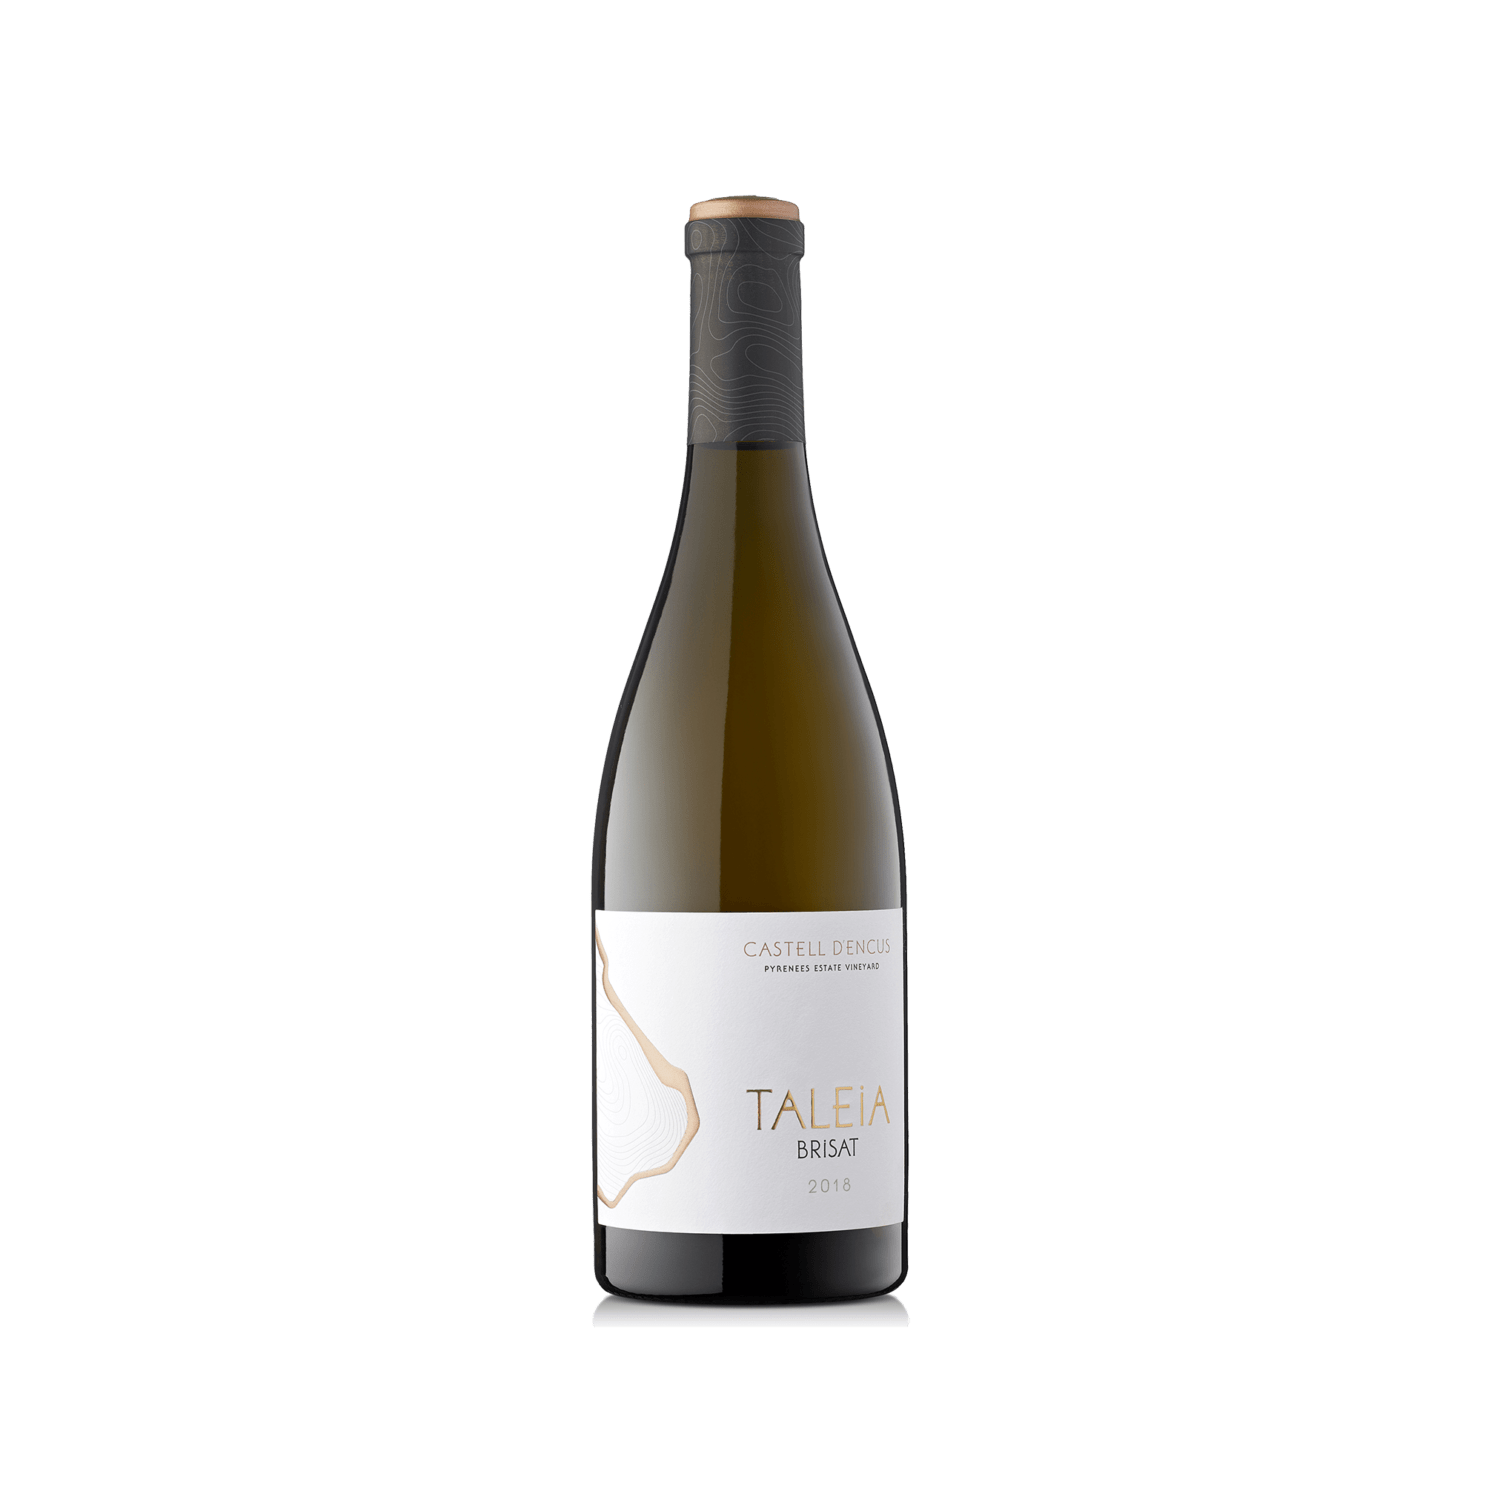 Botella de estudio del vino TALEIA BRISAT 2018